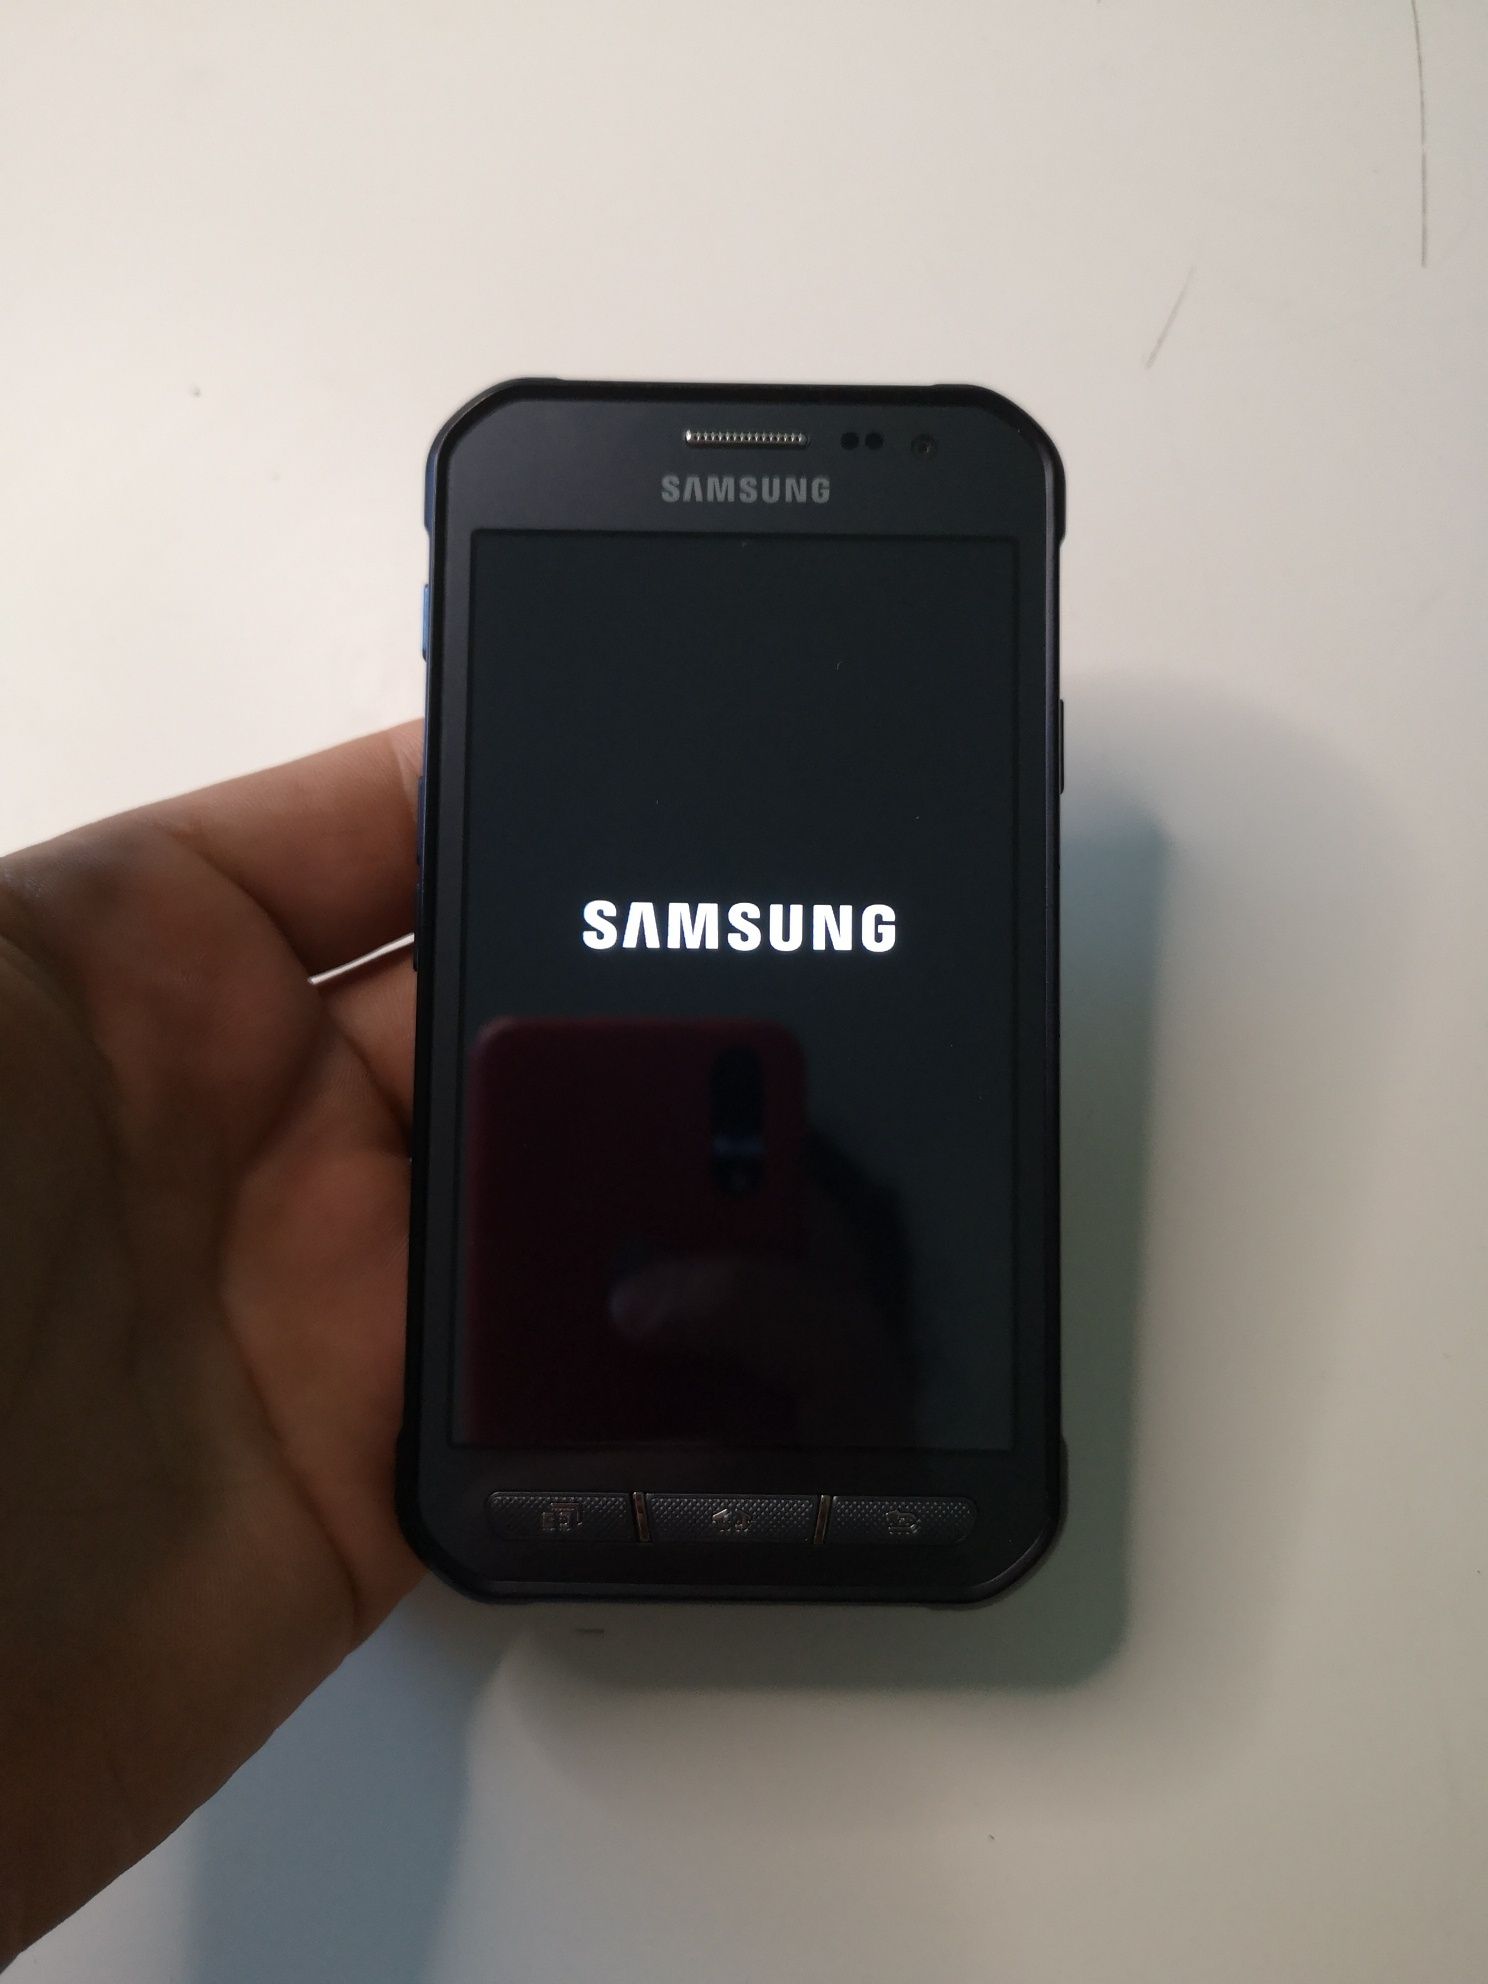 Захищений Samsung Galaxy Xcover 3 Самсунг гелегсі
Samsung